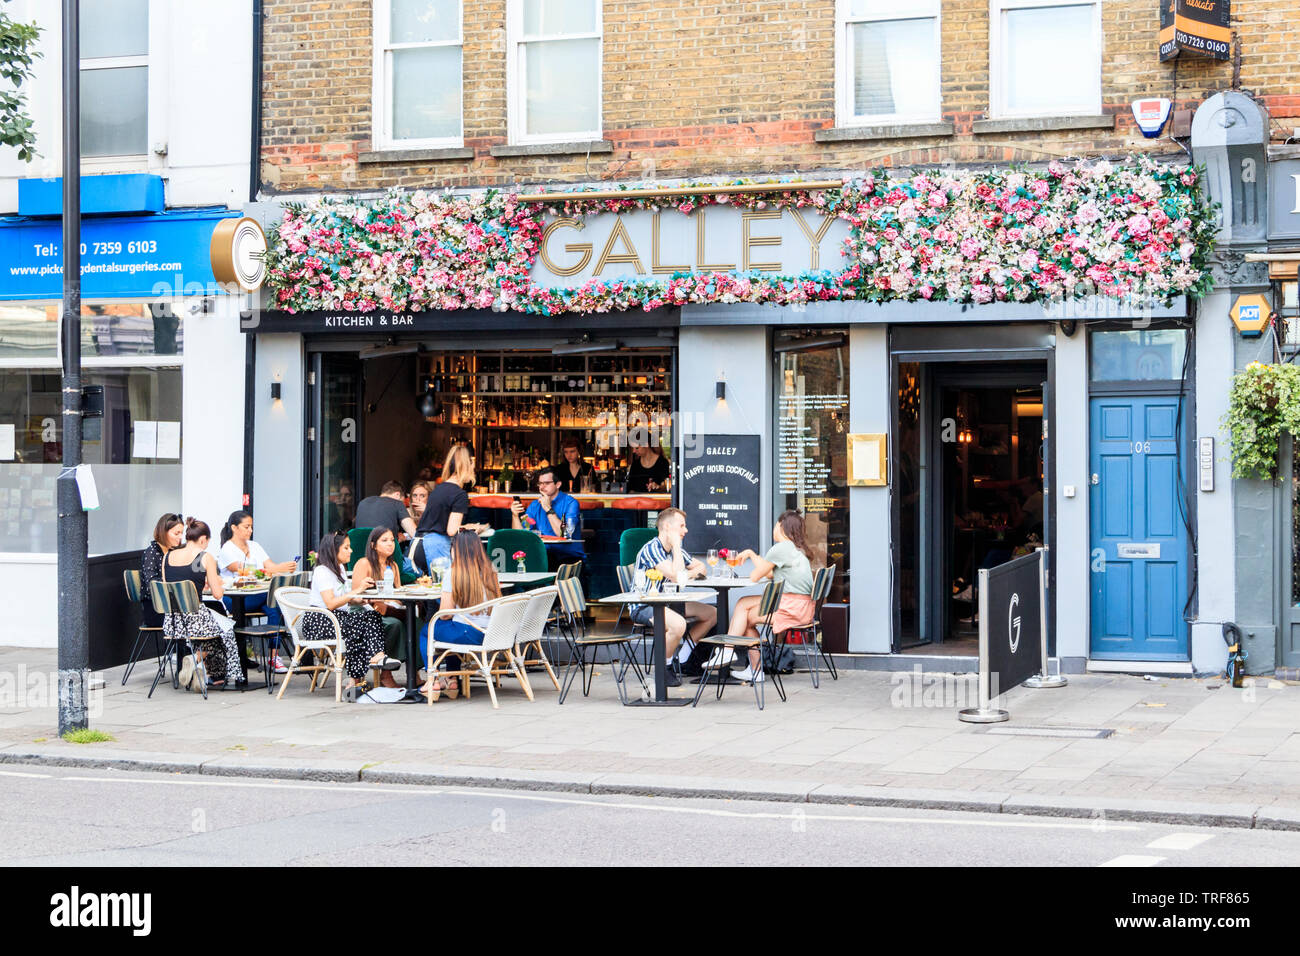 Alfresco diners outside the Galley restaurant on Upper Street, London, UK Stock Photo